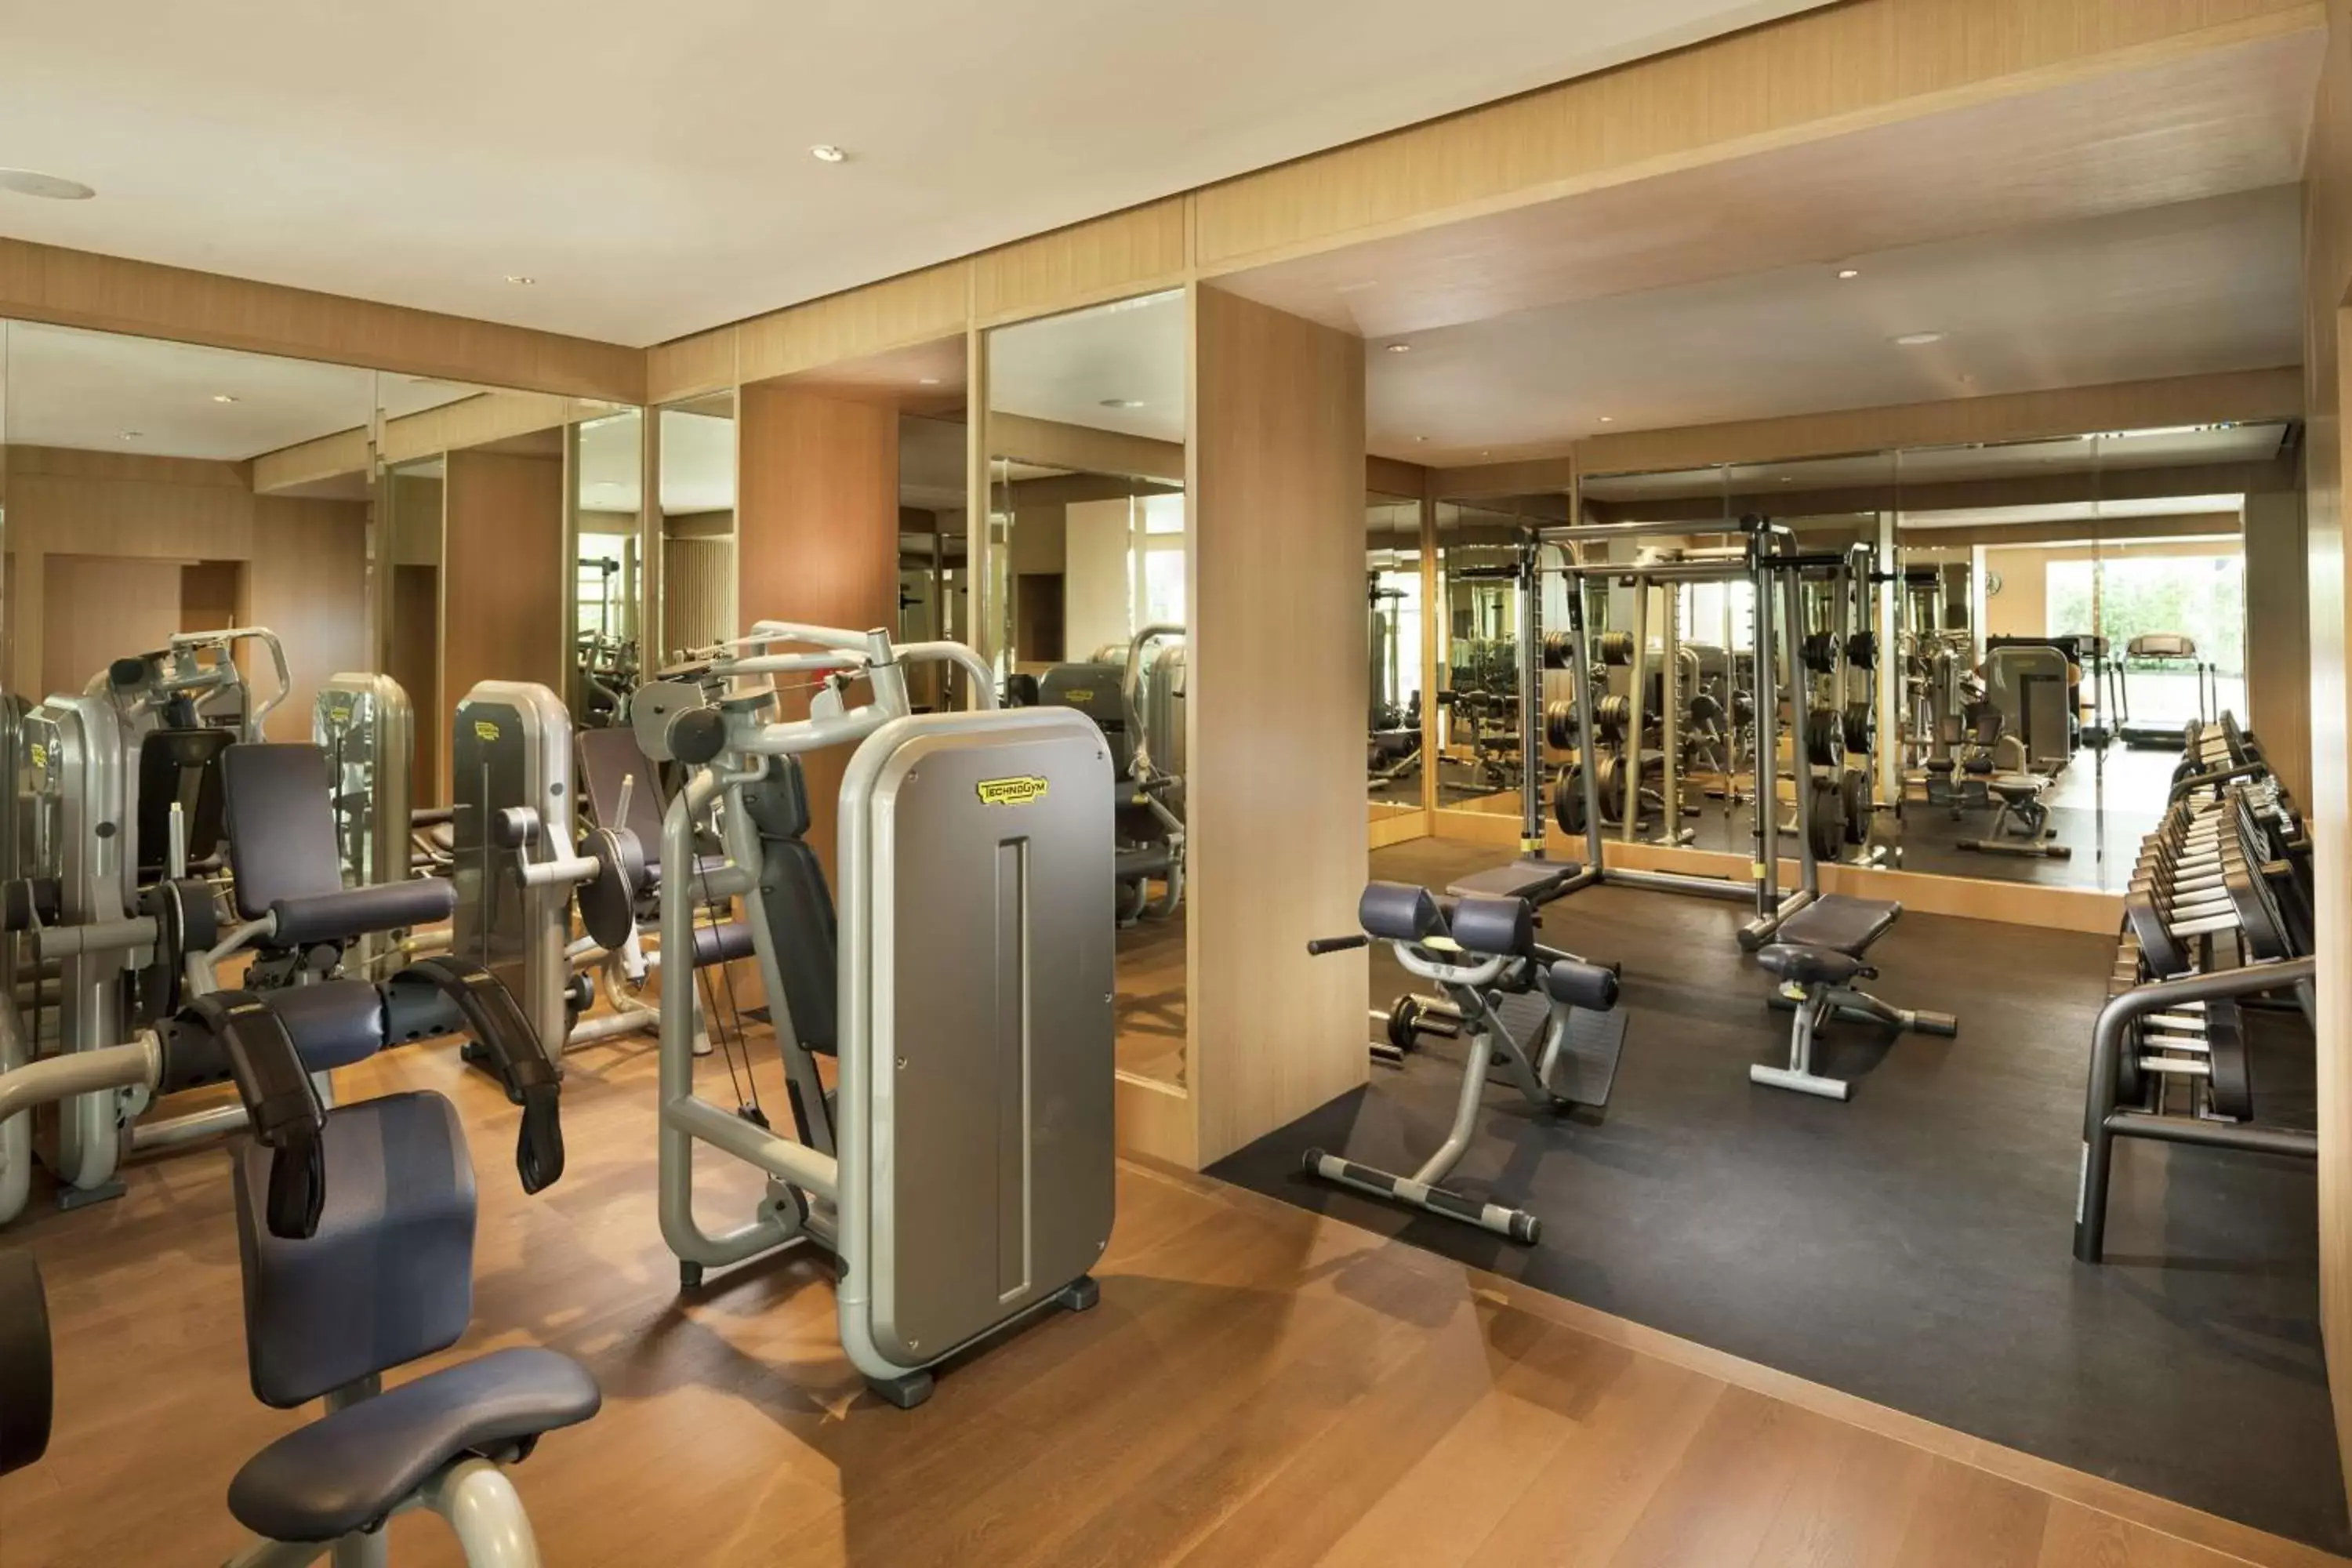 Fitness centre/facilities, Fitness Center/Facilities in Conrad Centennial Singapore